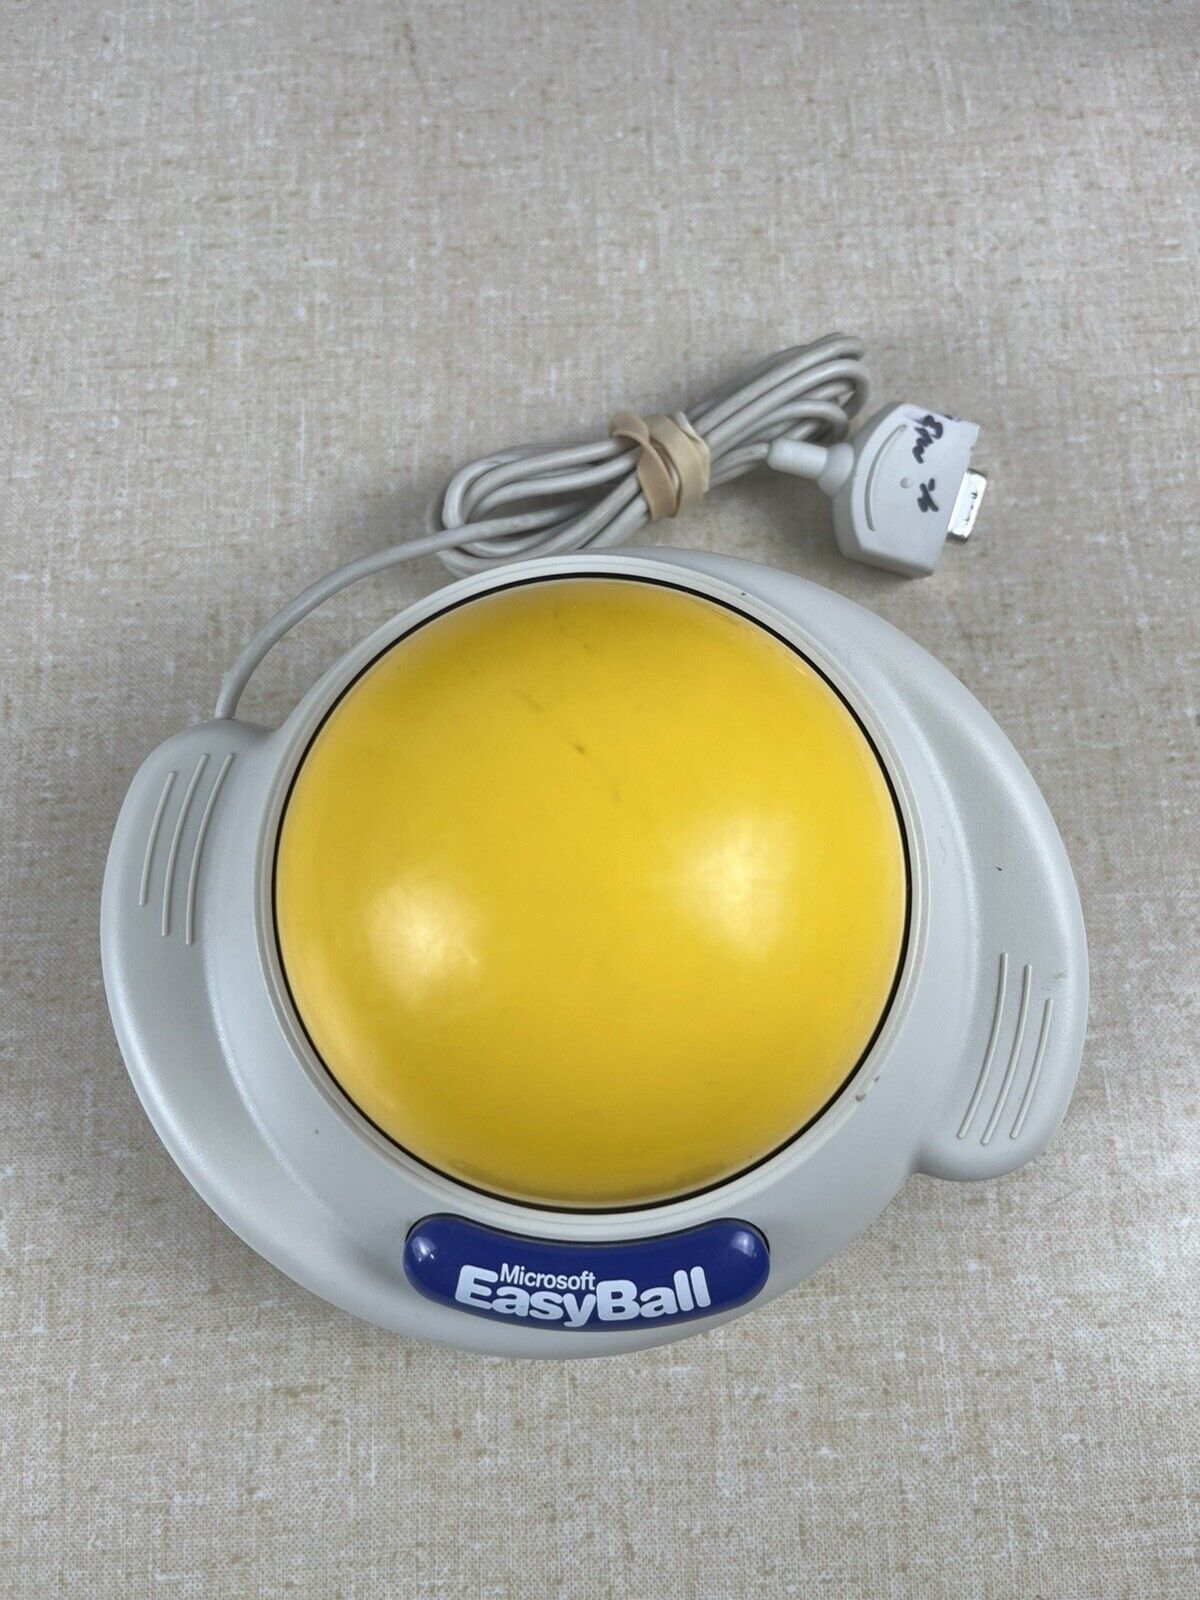 Vintage Microsoft Easyball Children’s Mouse Version 1.0